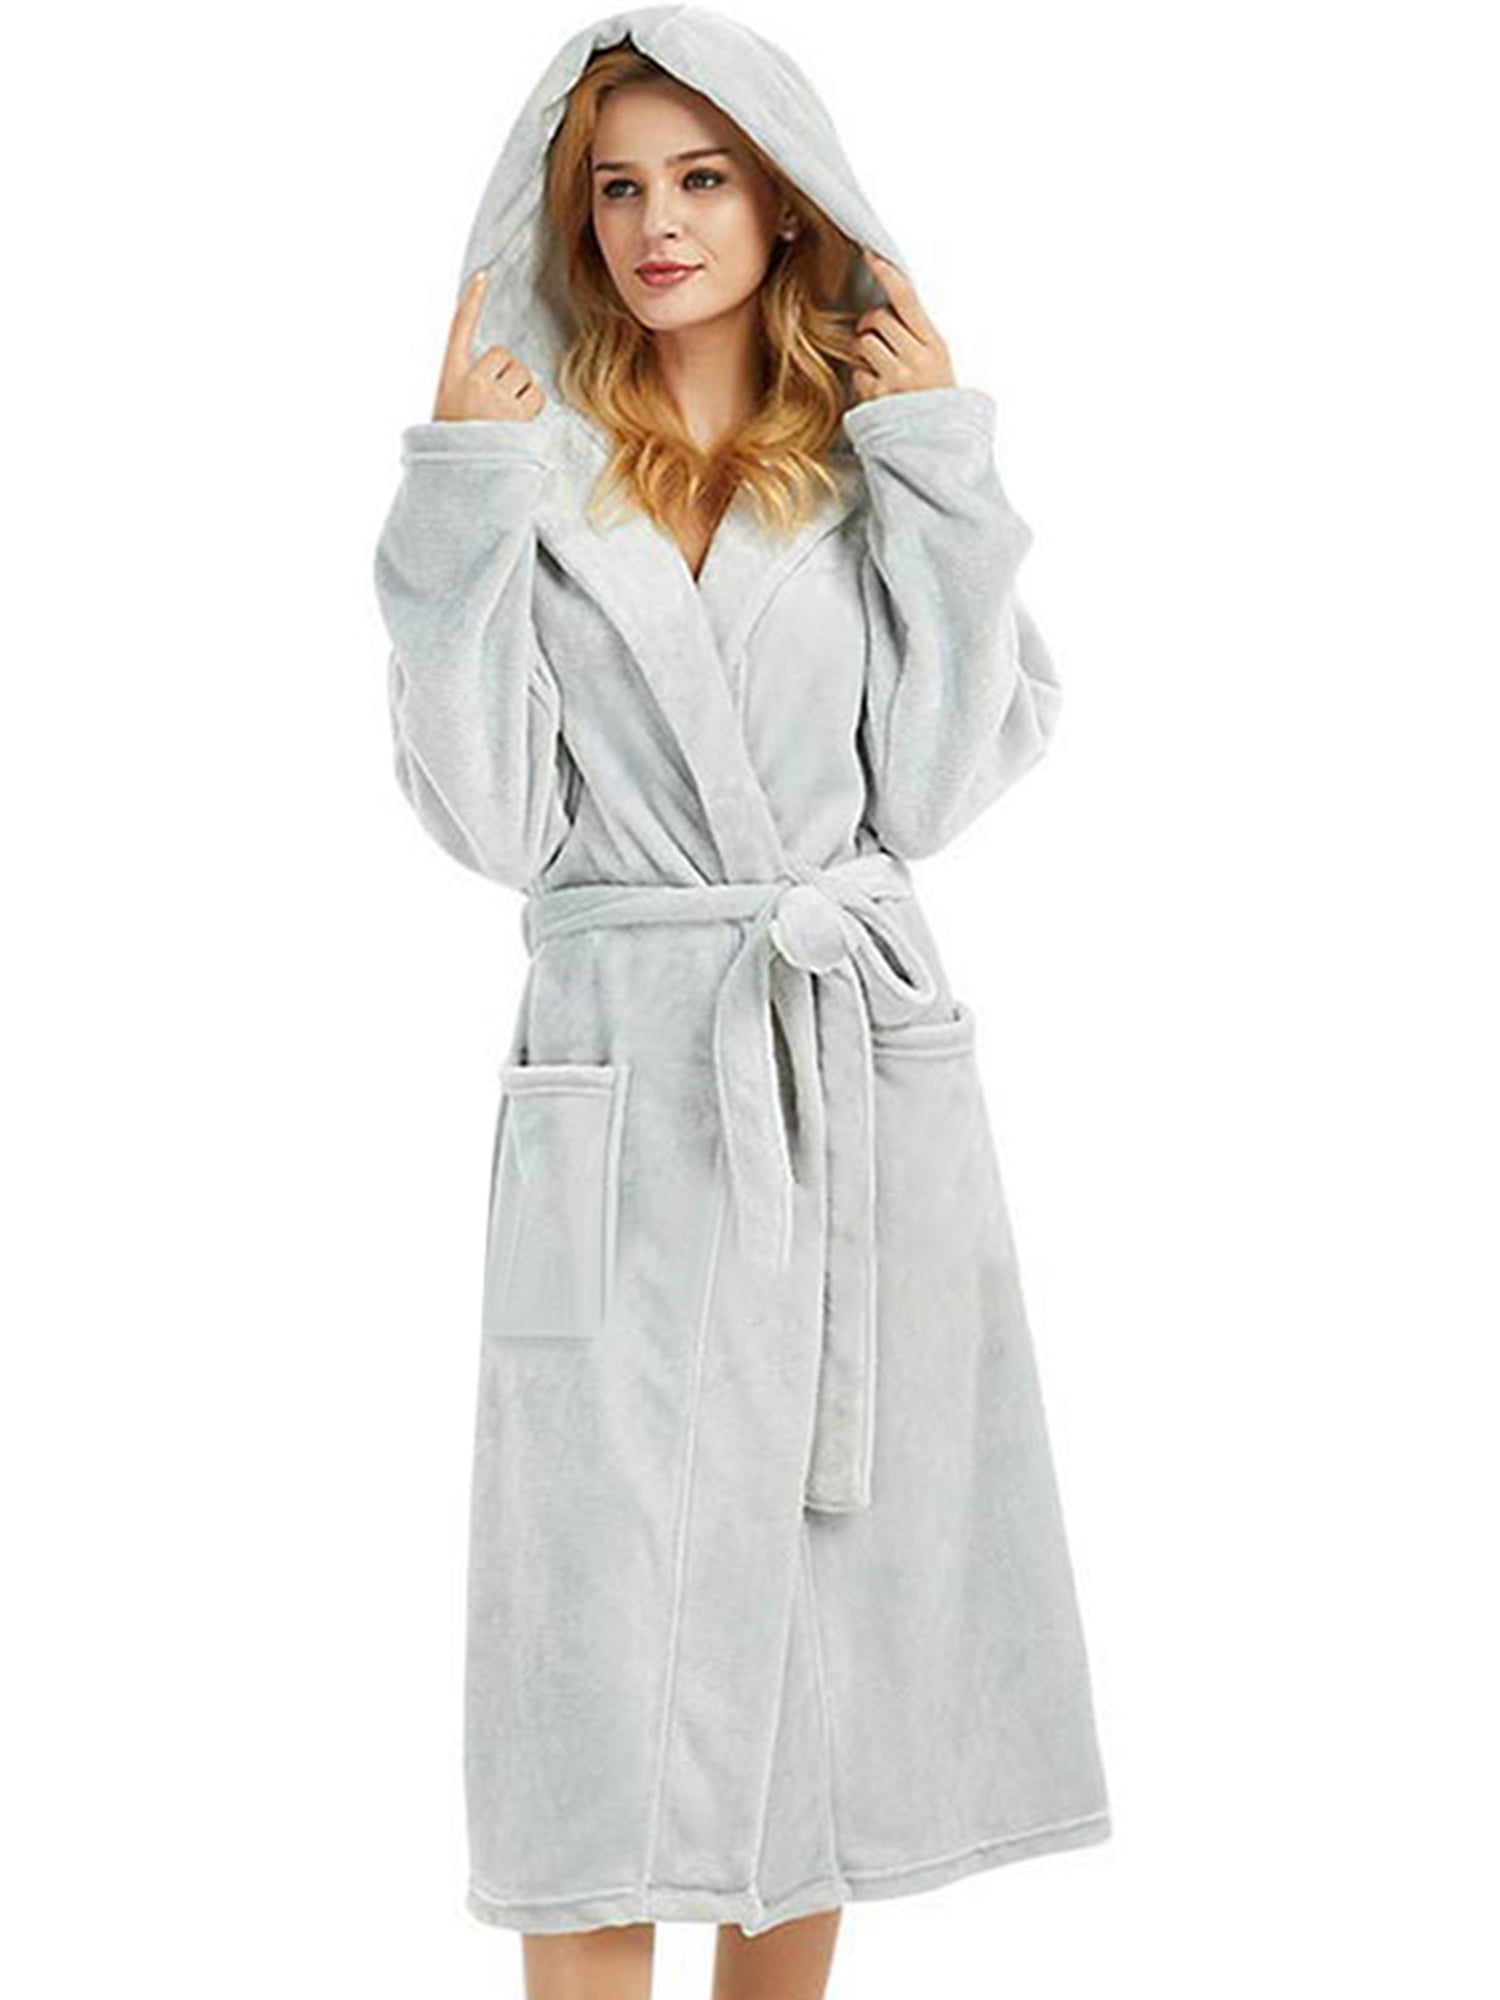 Women Ladies Hooded Fleece Fluffy Soft Warm Bath Robe Nightwear Ling Cardigan US